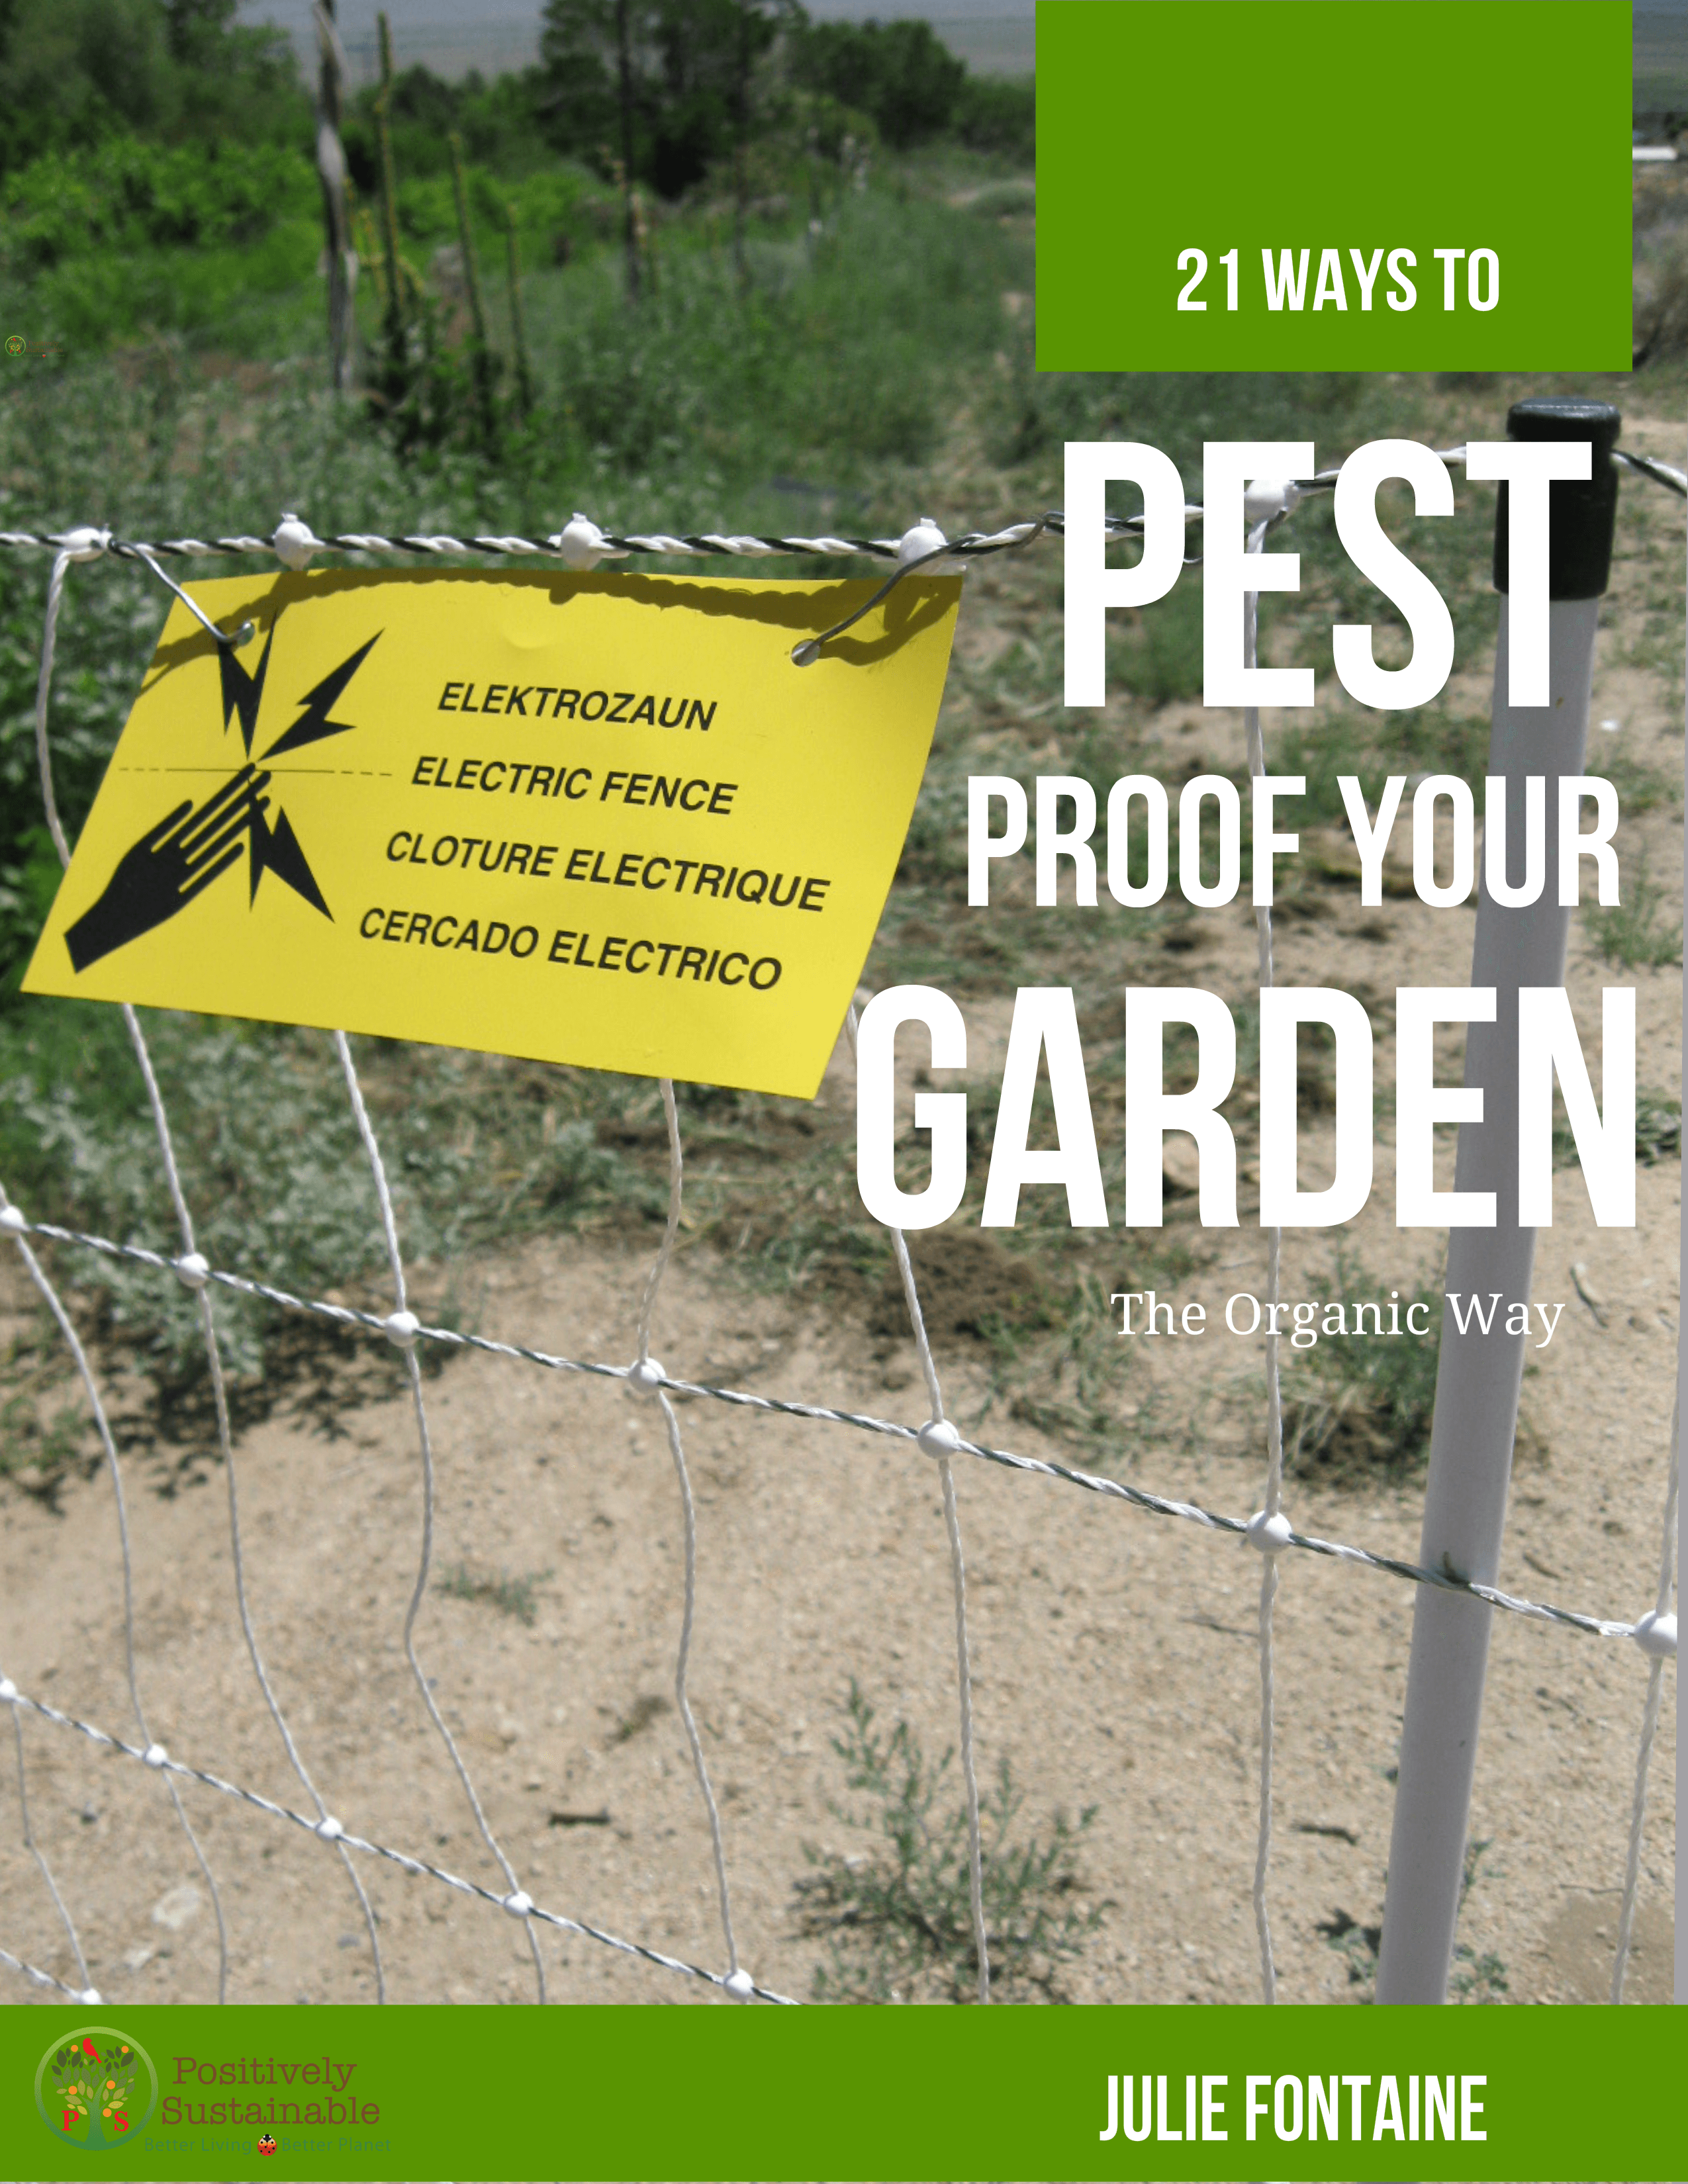 21 Ways to Pest Proof Your Garden